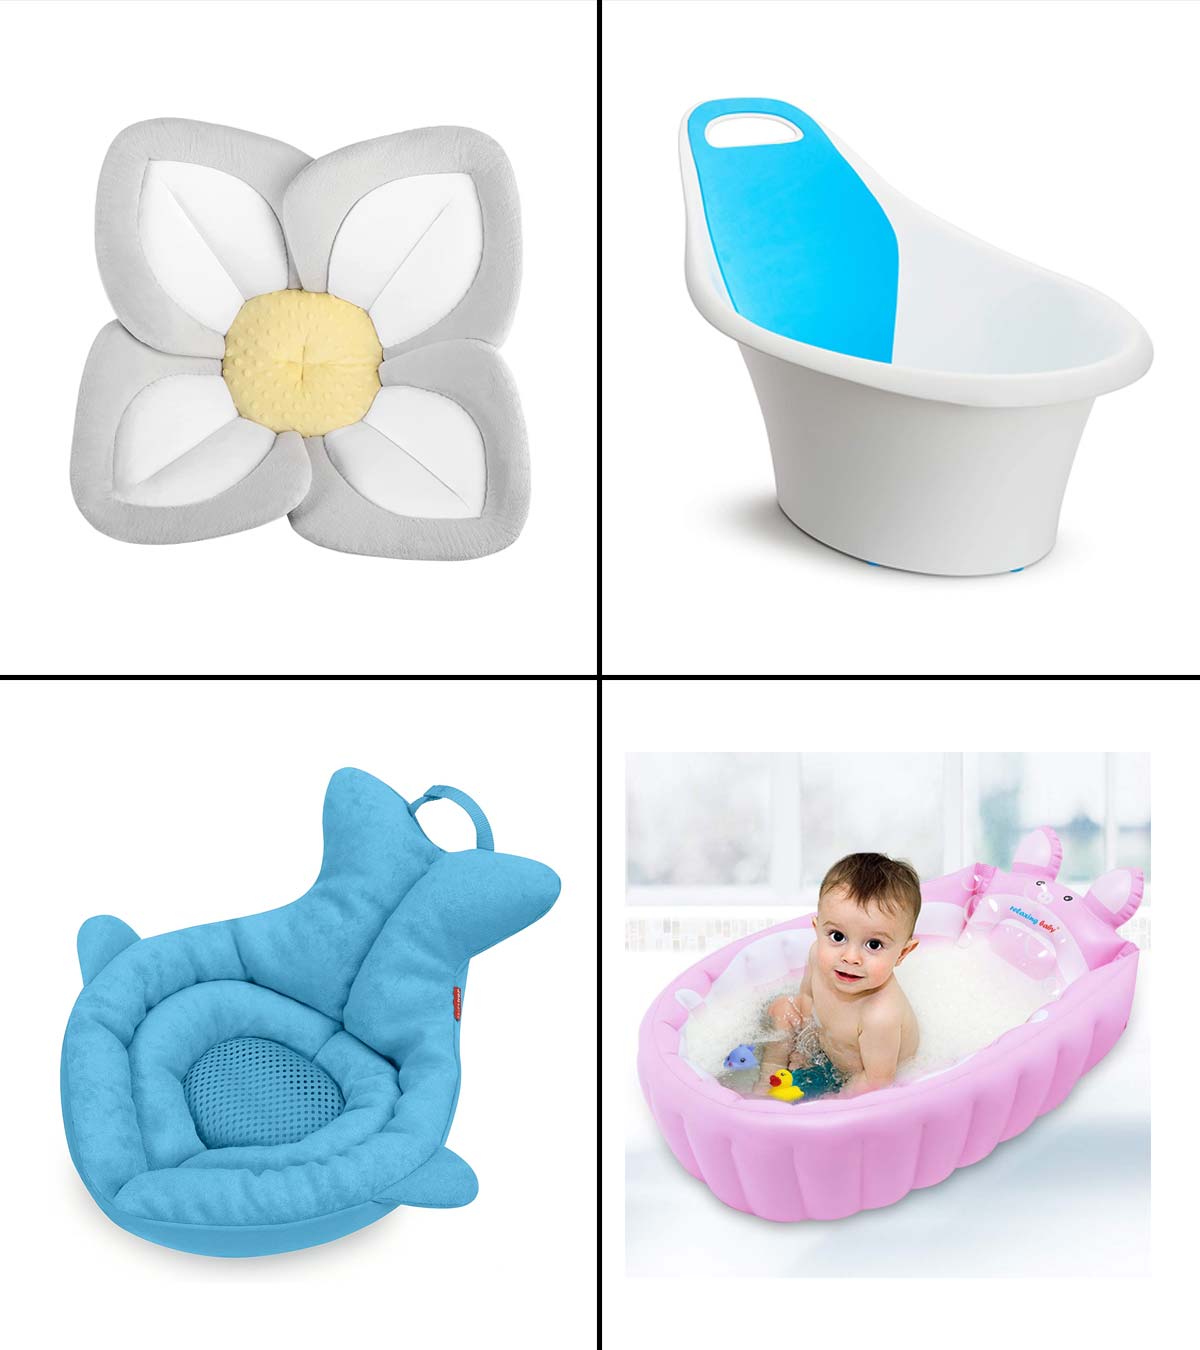  Nuliie Baby Bathtub Newborn Sink Bathtub Baby Sink Bath Mat  Soft Flower Infant Bathtub Support, Baby Newborn Essentials, Baby Gifts and  Baby Registry Search (Yellow) : Baby